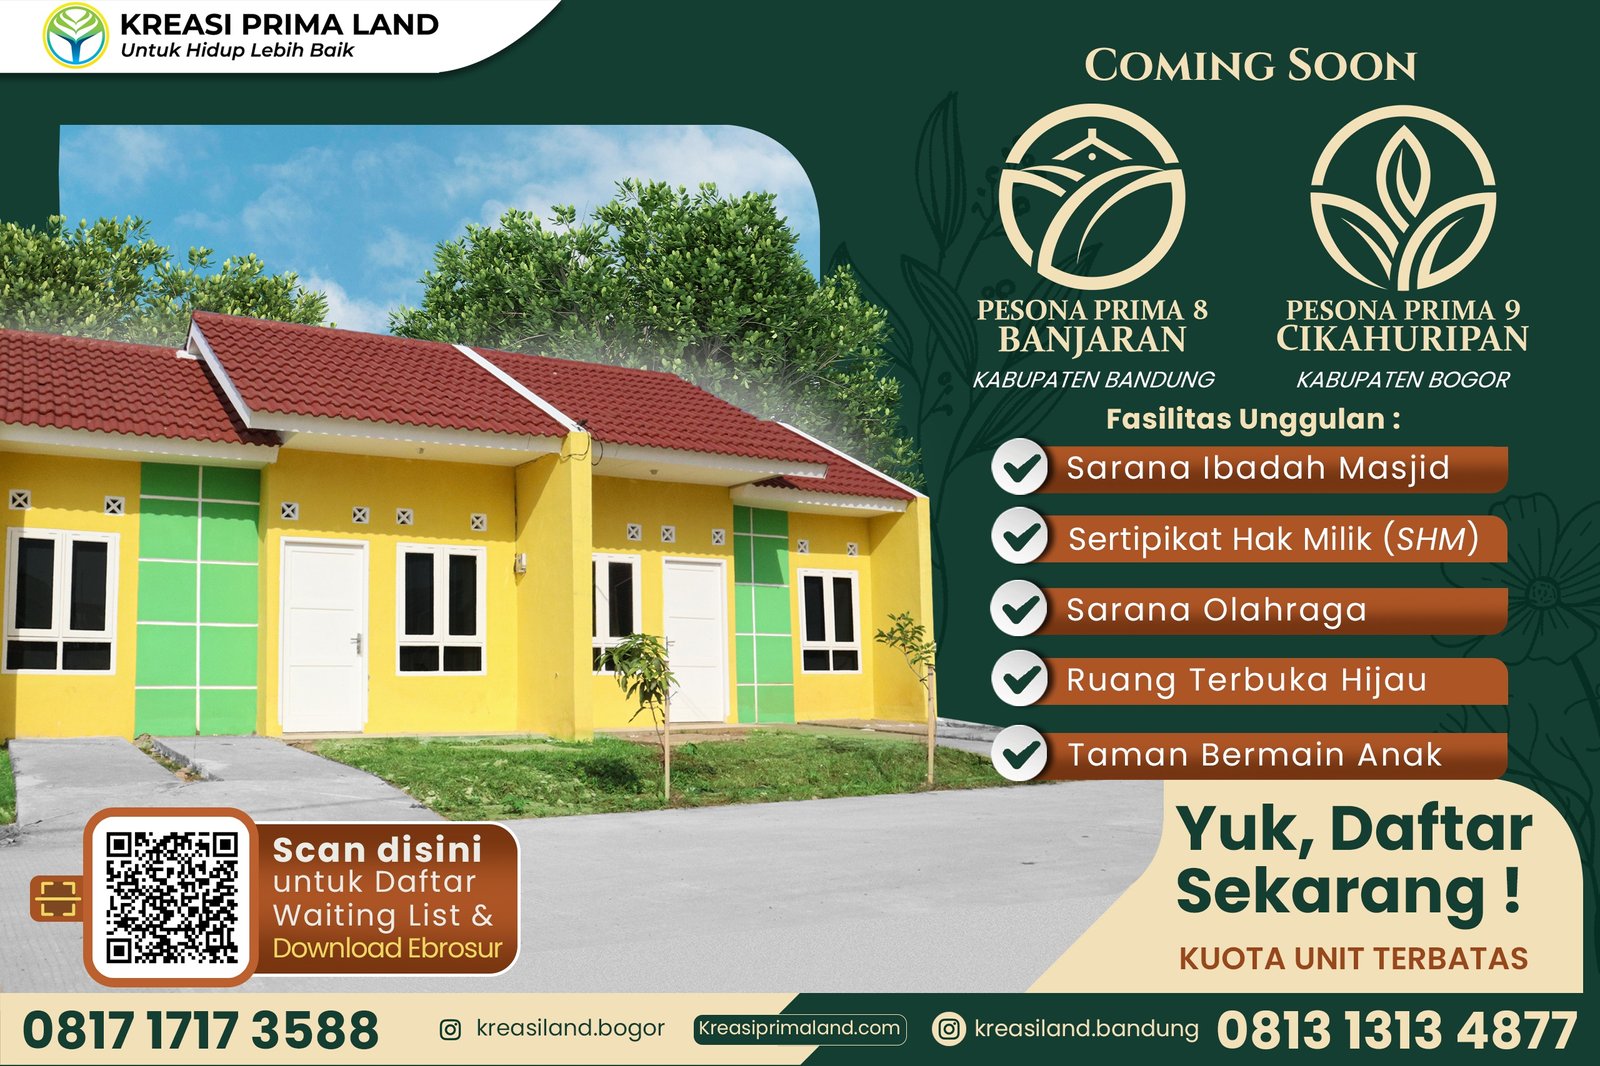 Kreasi Prima Land Rumah KPR Subsidi Syariah Bandung